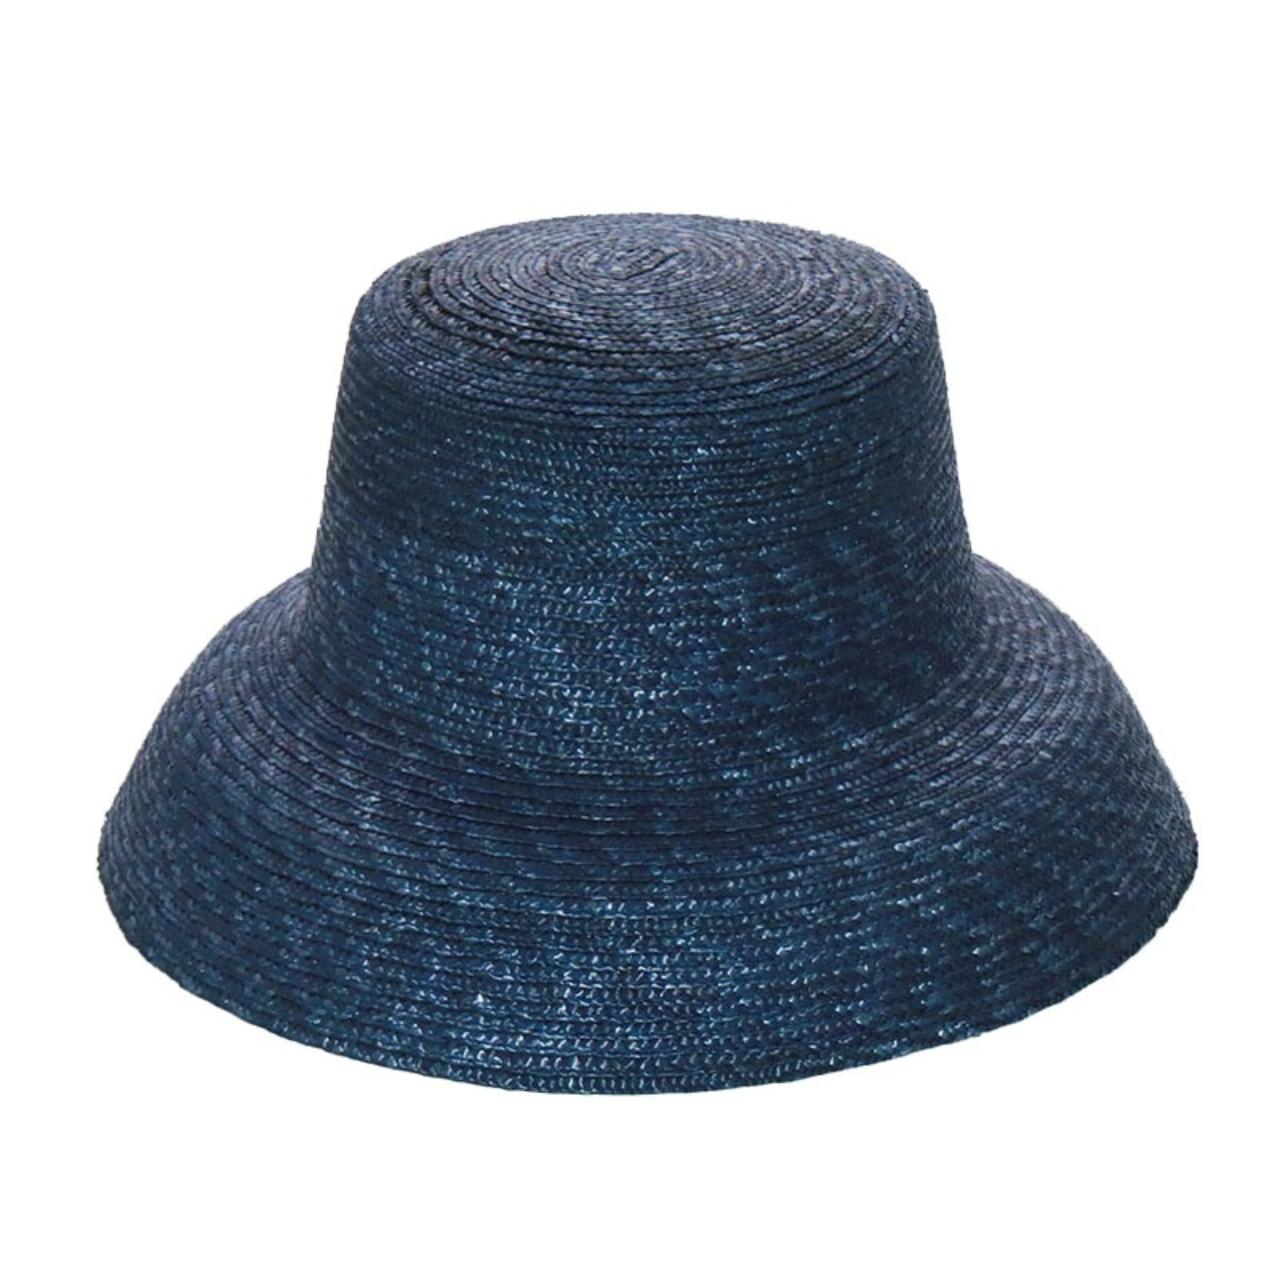 Straw summer sun hats for women sun protection beach - Depop